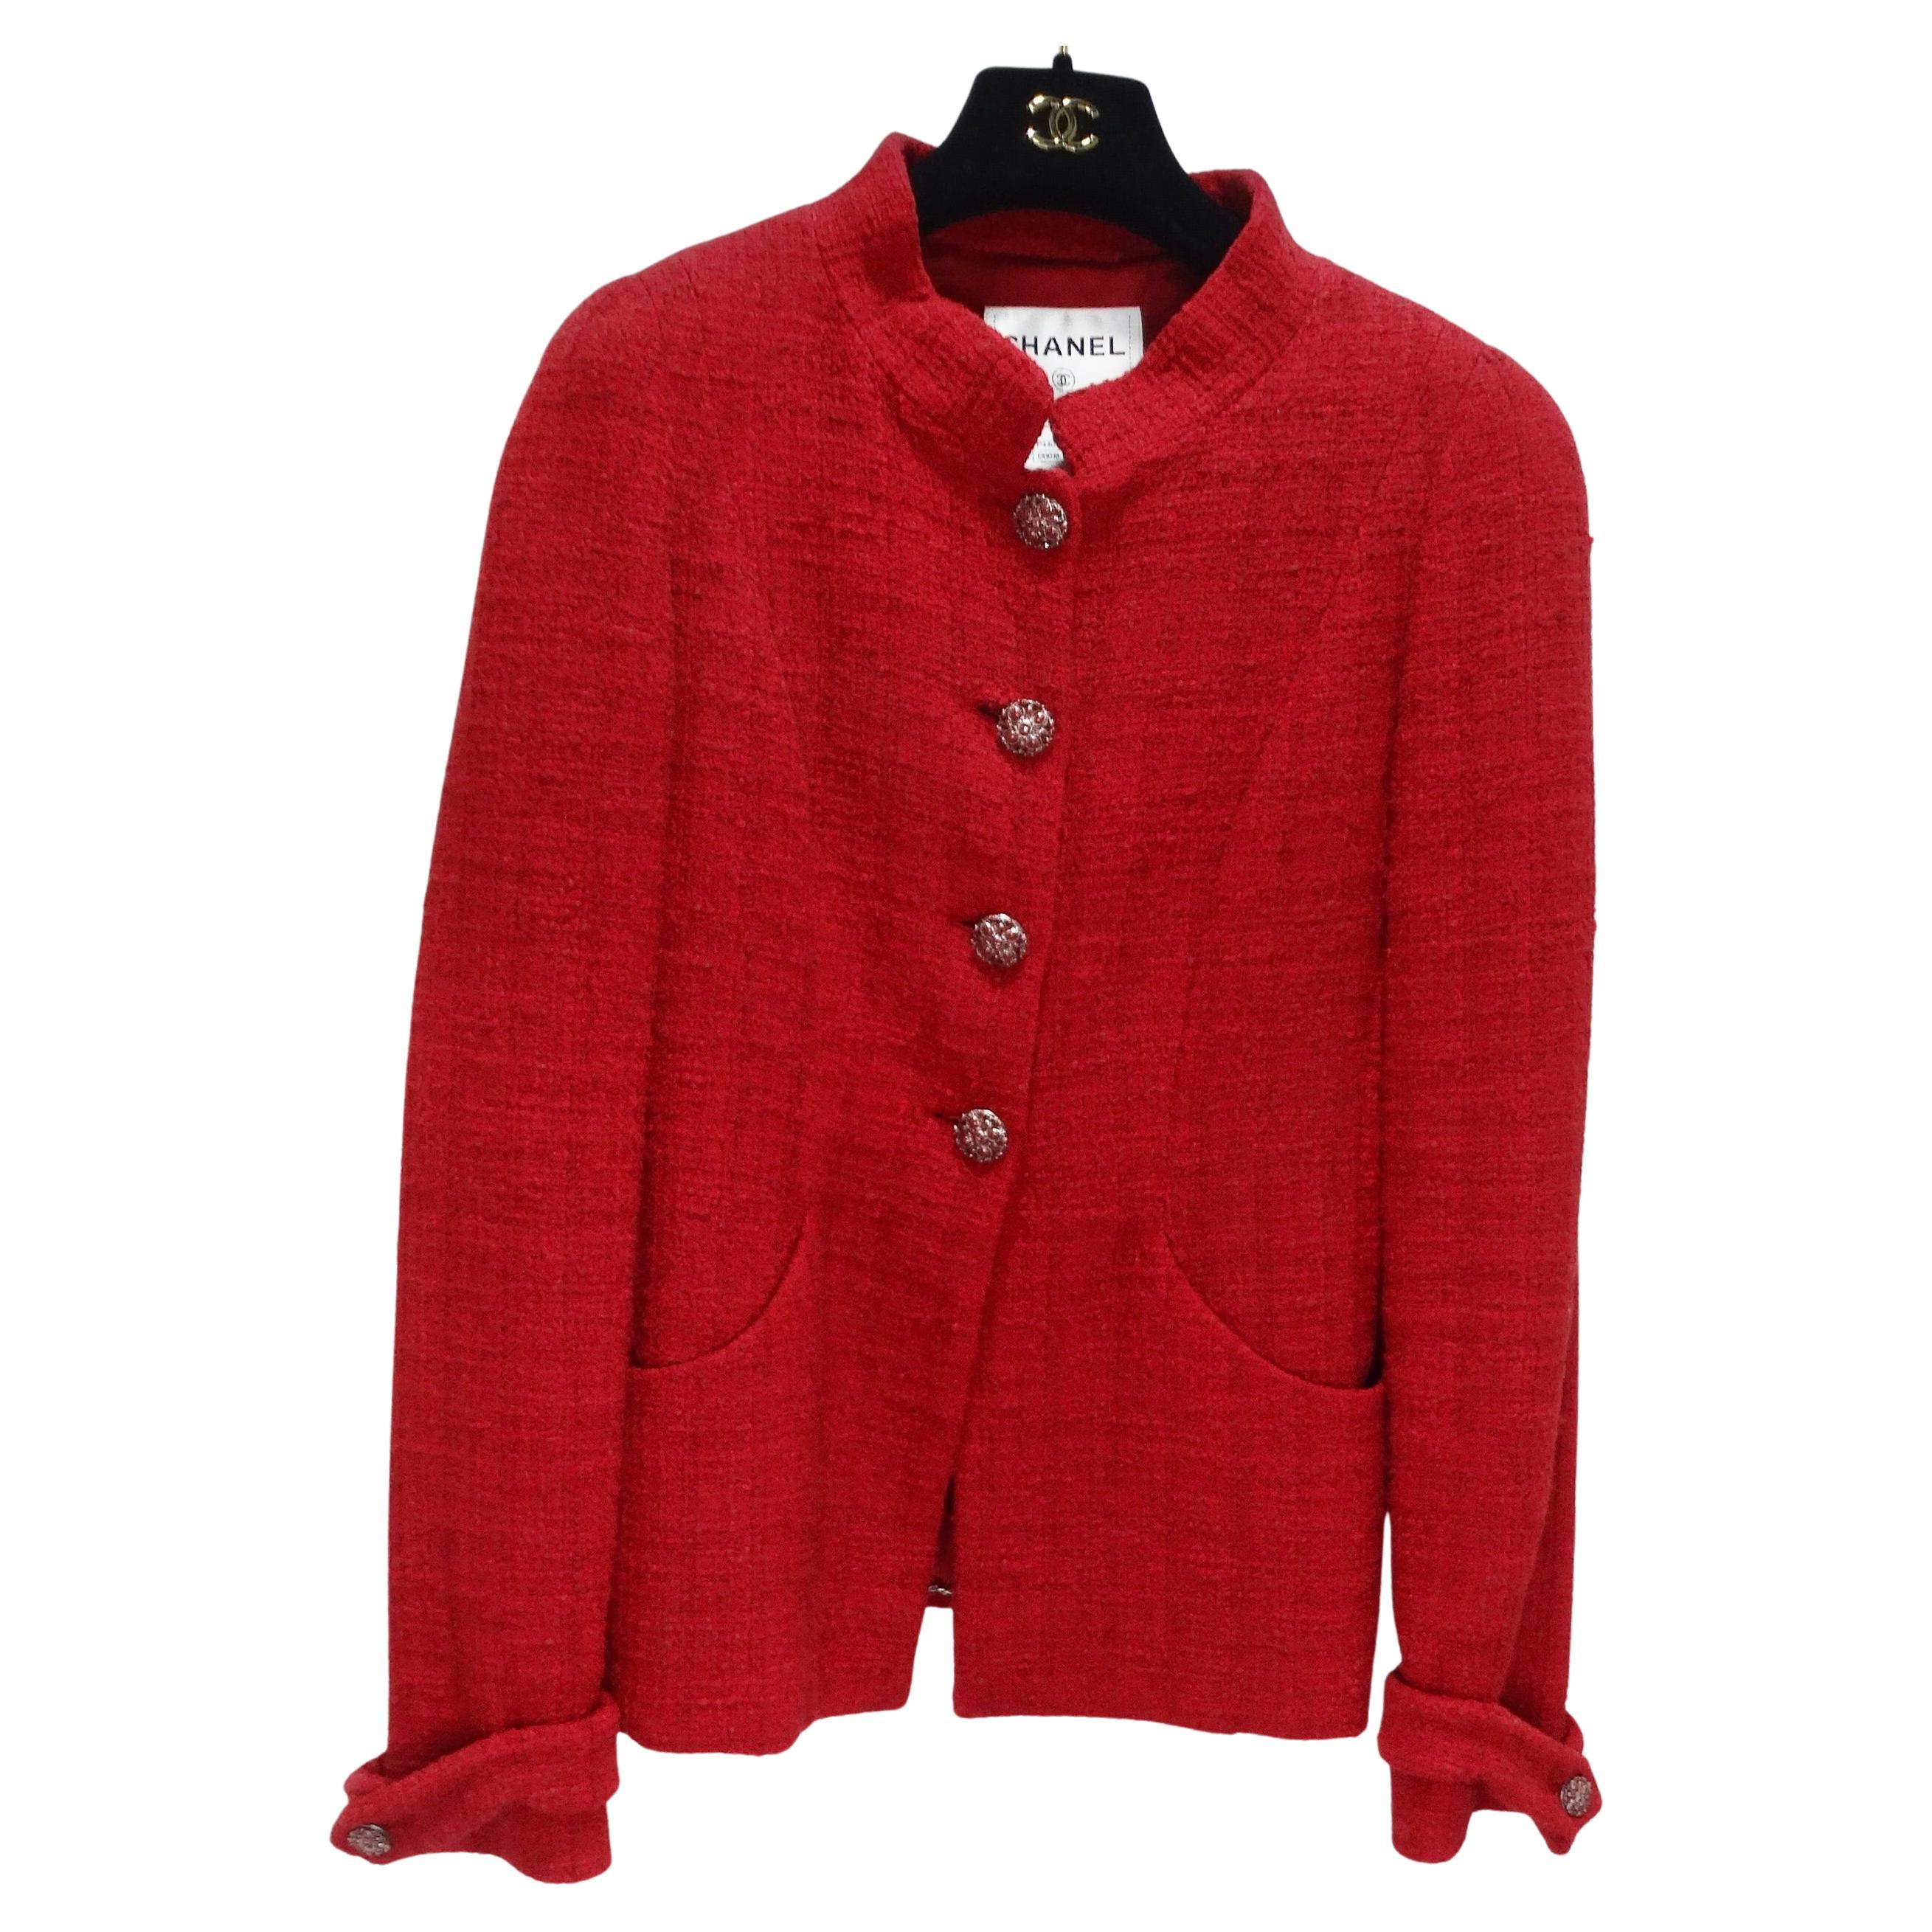 Chanel Red Blazer - 17 For Sale on 1stDibs